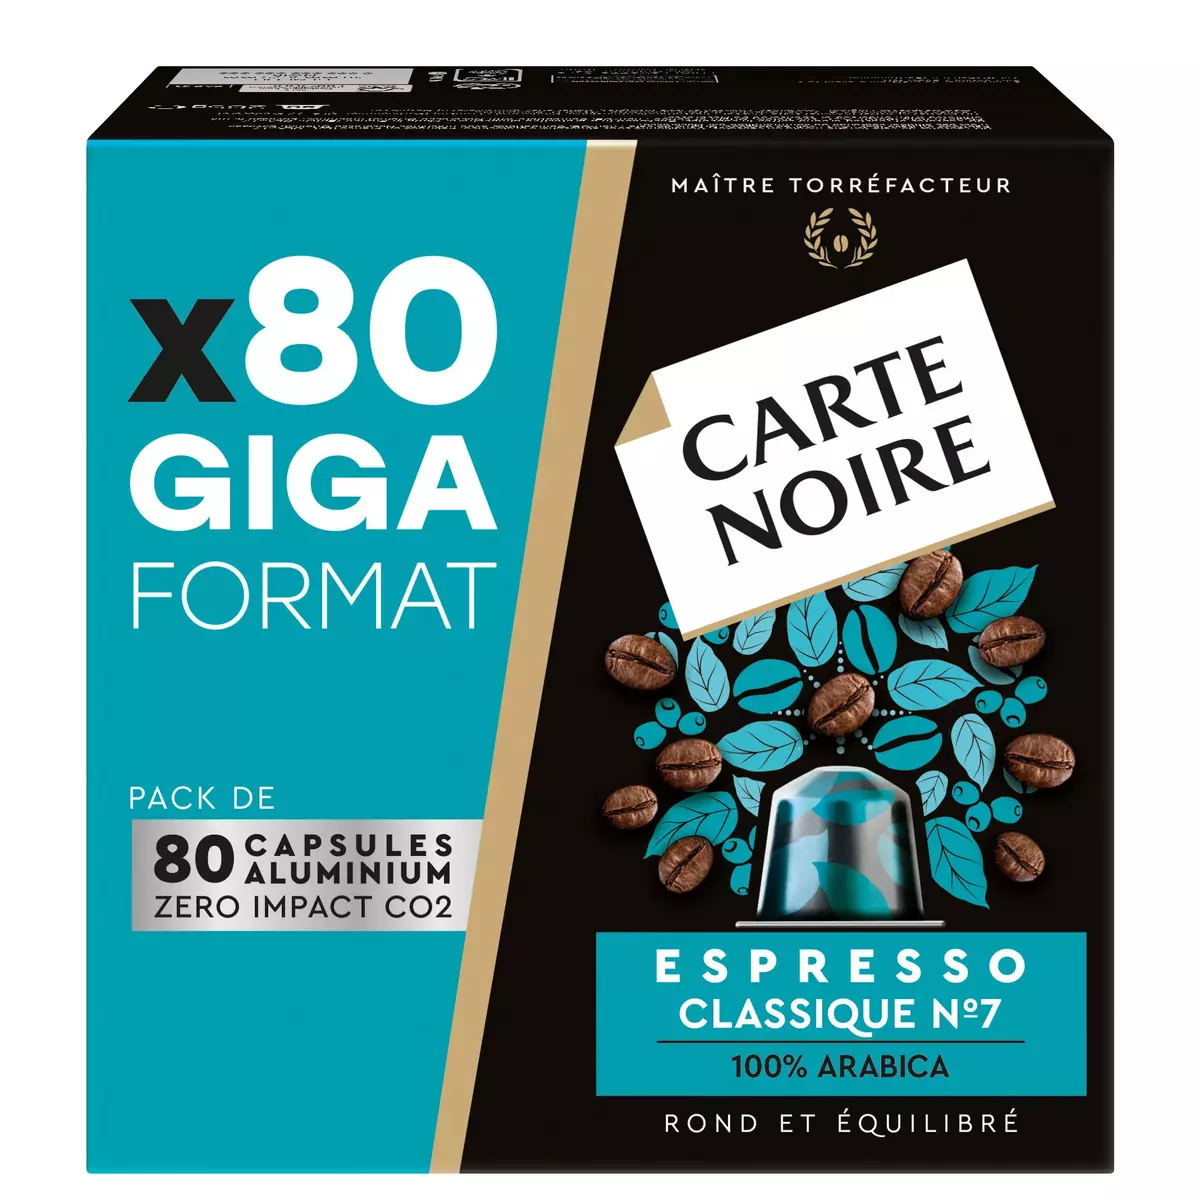 CARTE NOIRE - Café Grain Carte Noire Espresso - 100 % Arabica